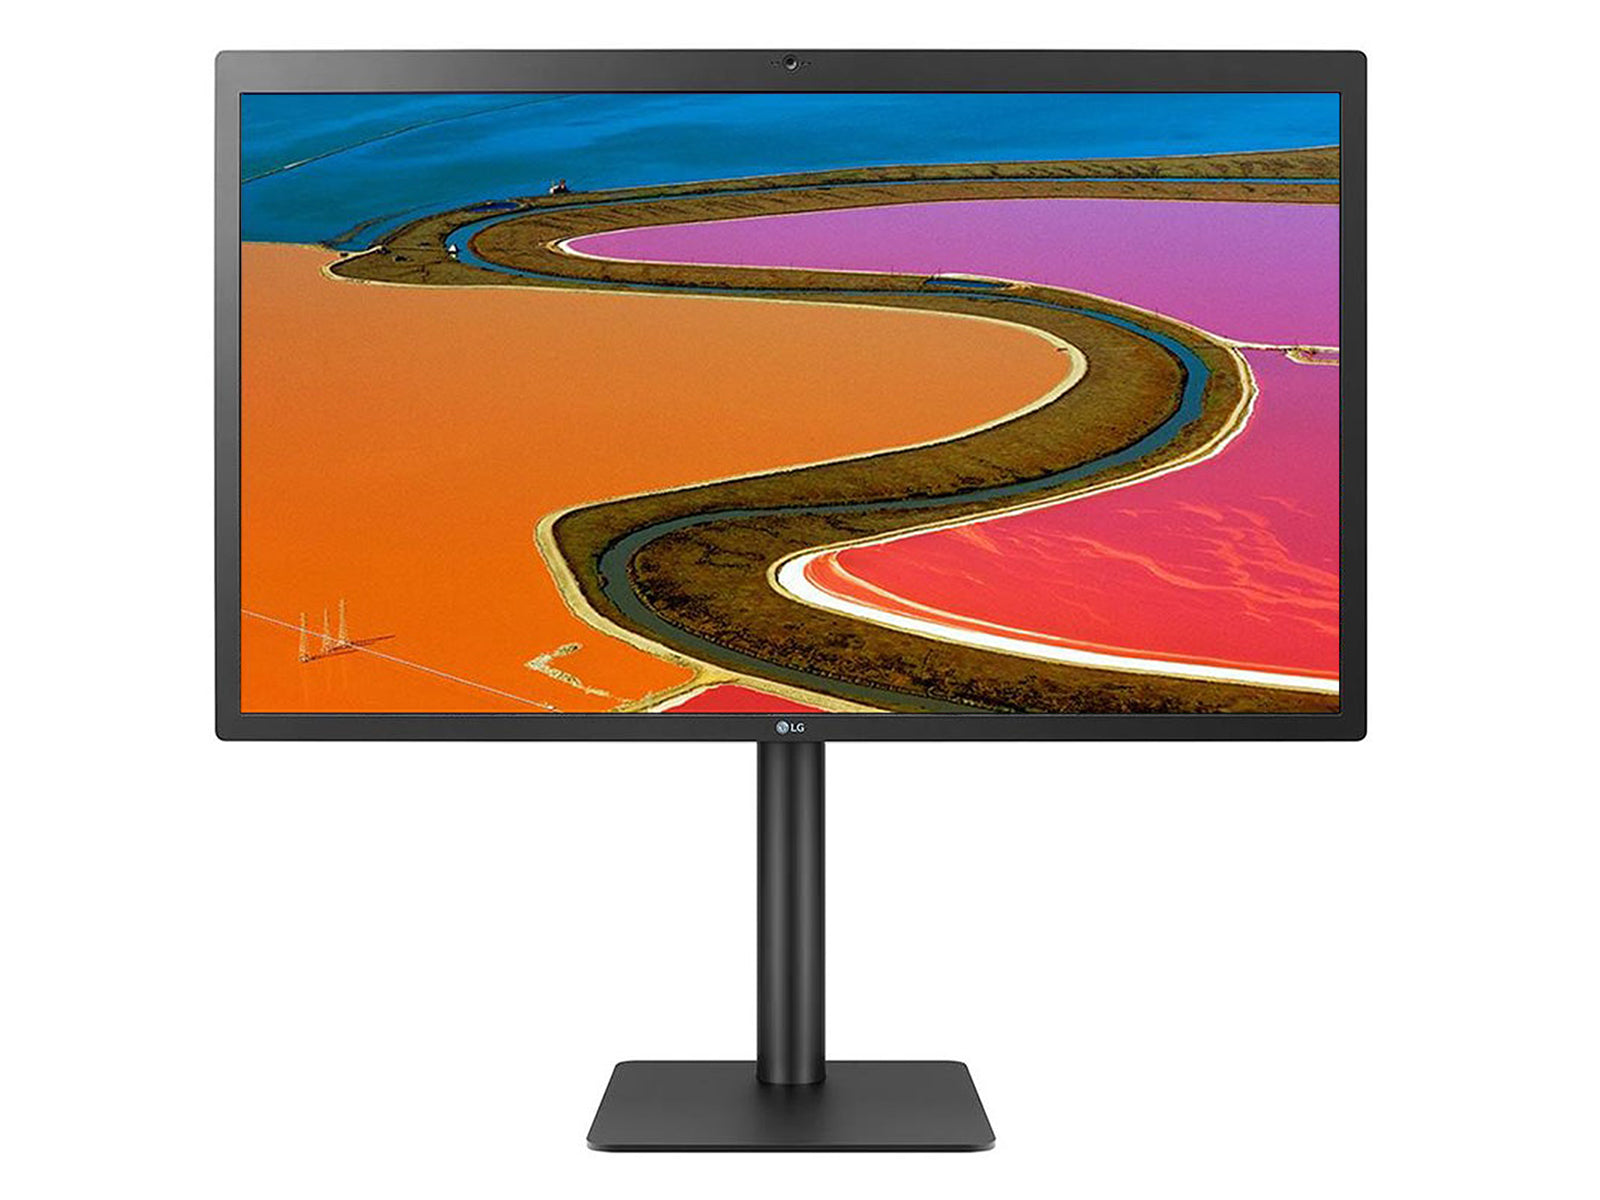 LG UltraFine 5K 27" Color LED Display Monitor (27MD5KA-B) Monitors.com 